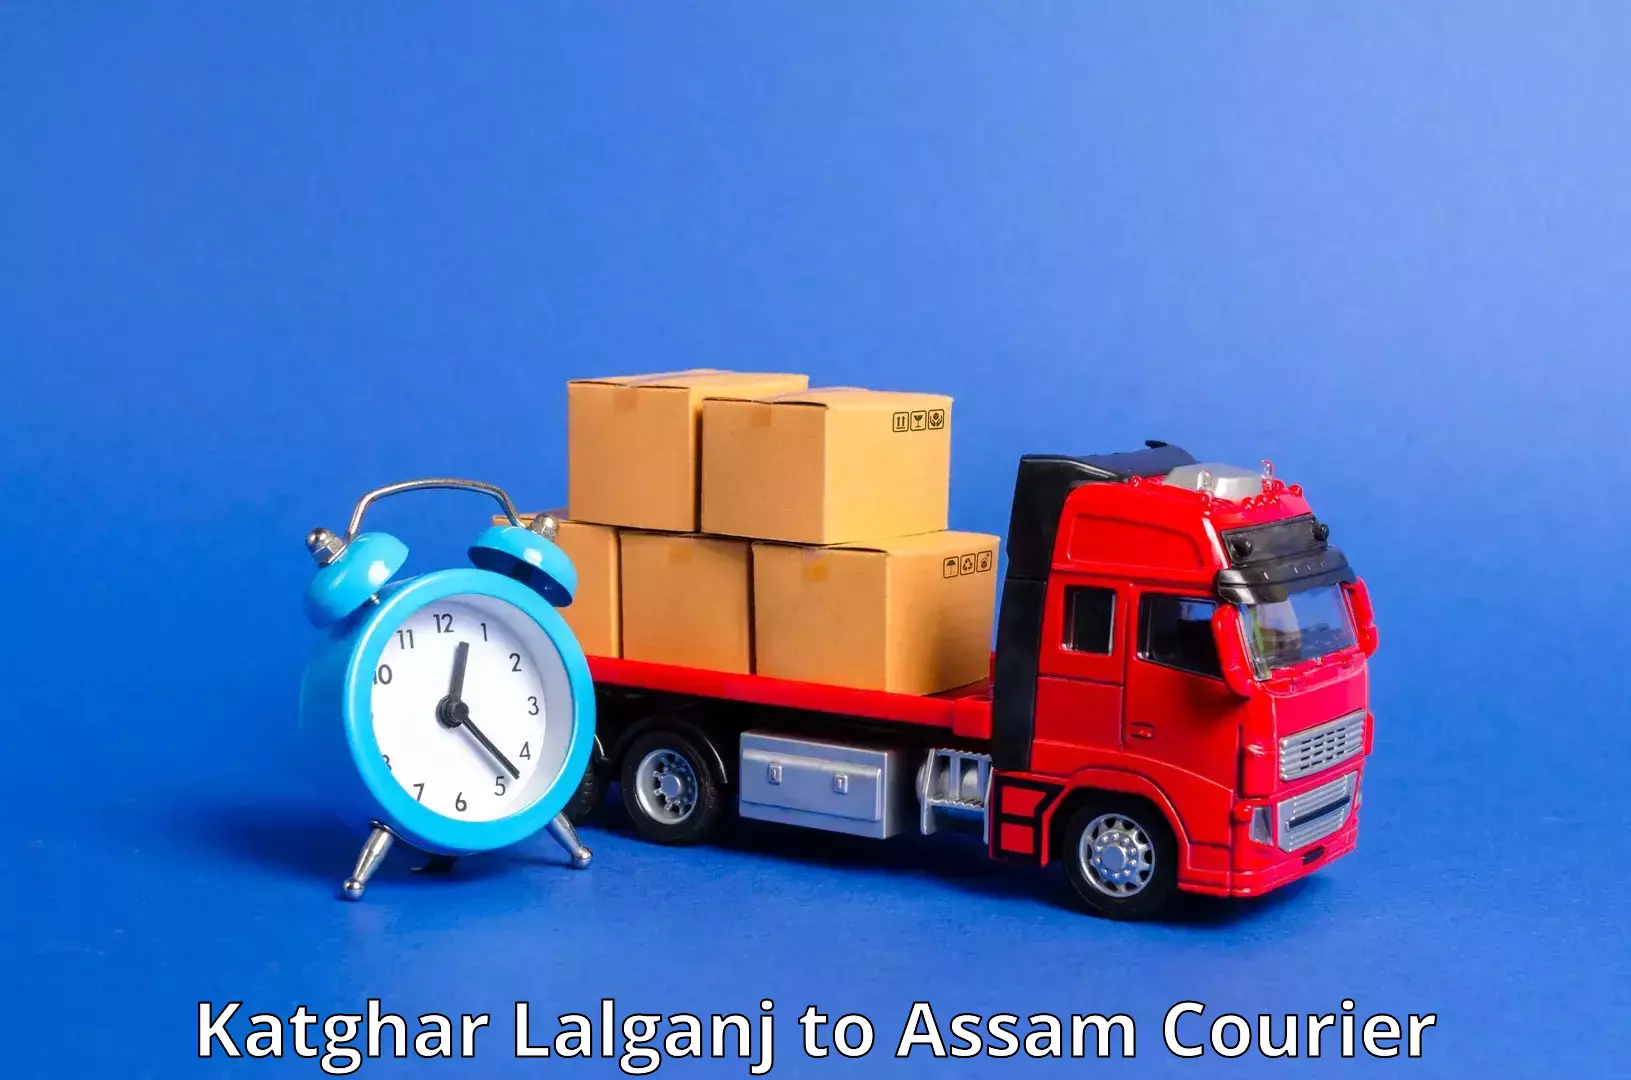 Postal and courier services Katghar Lalganj to Hajo